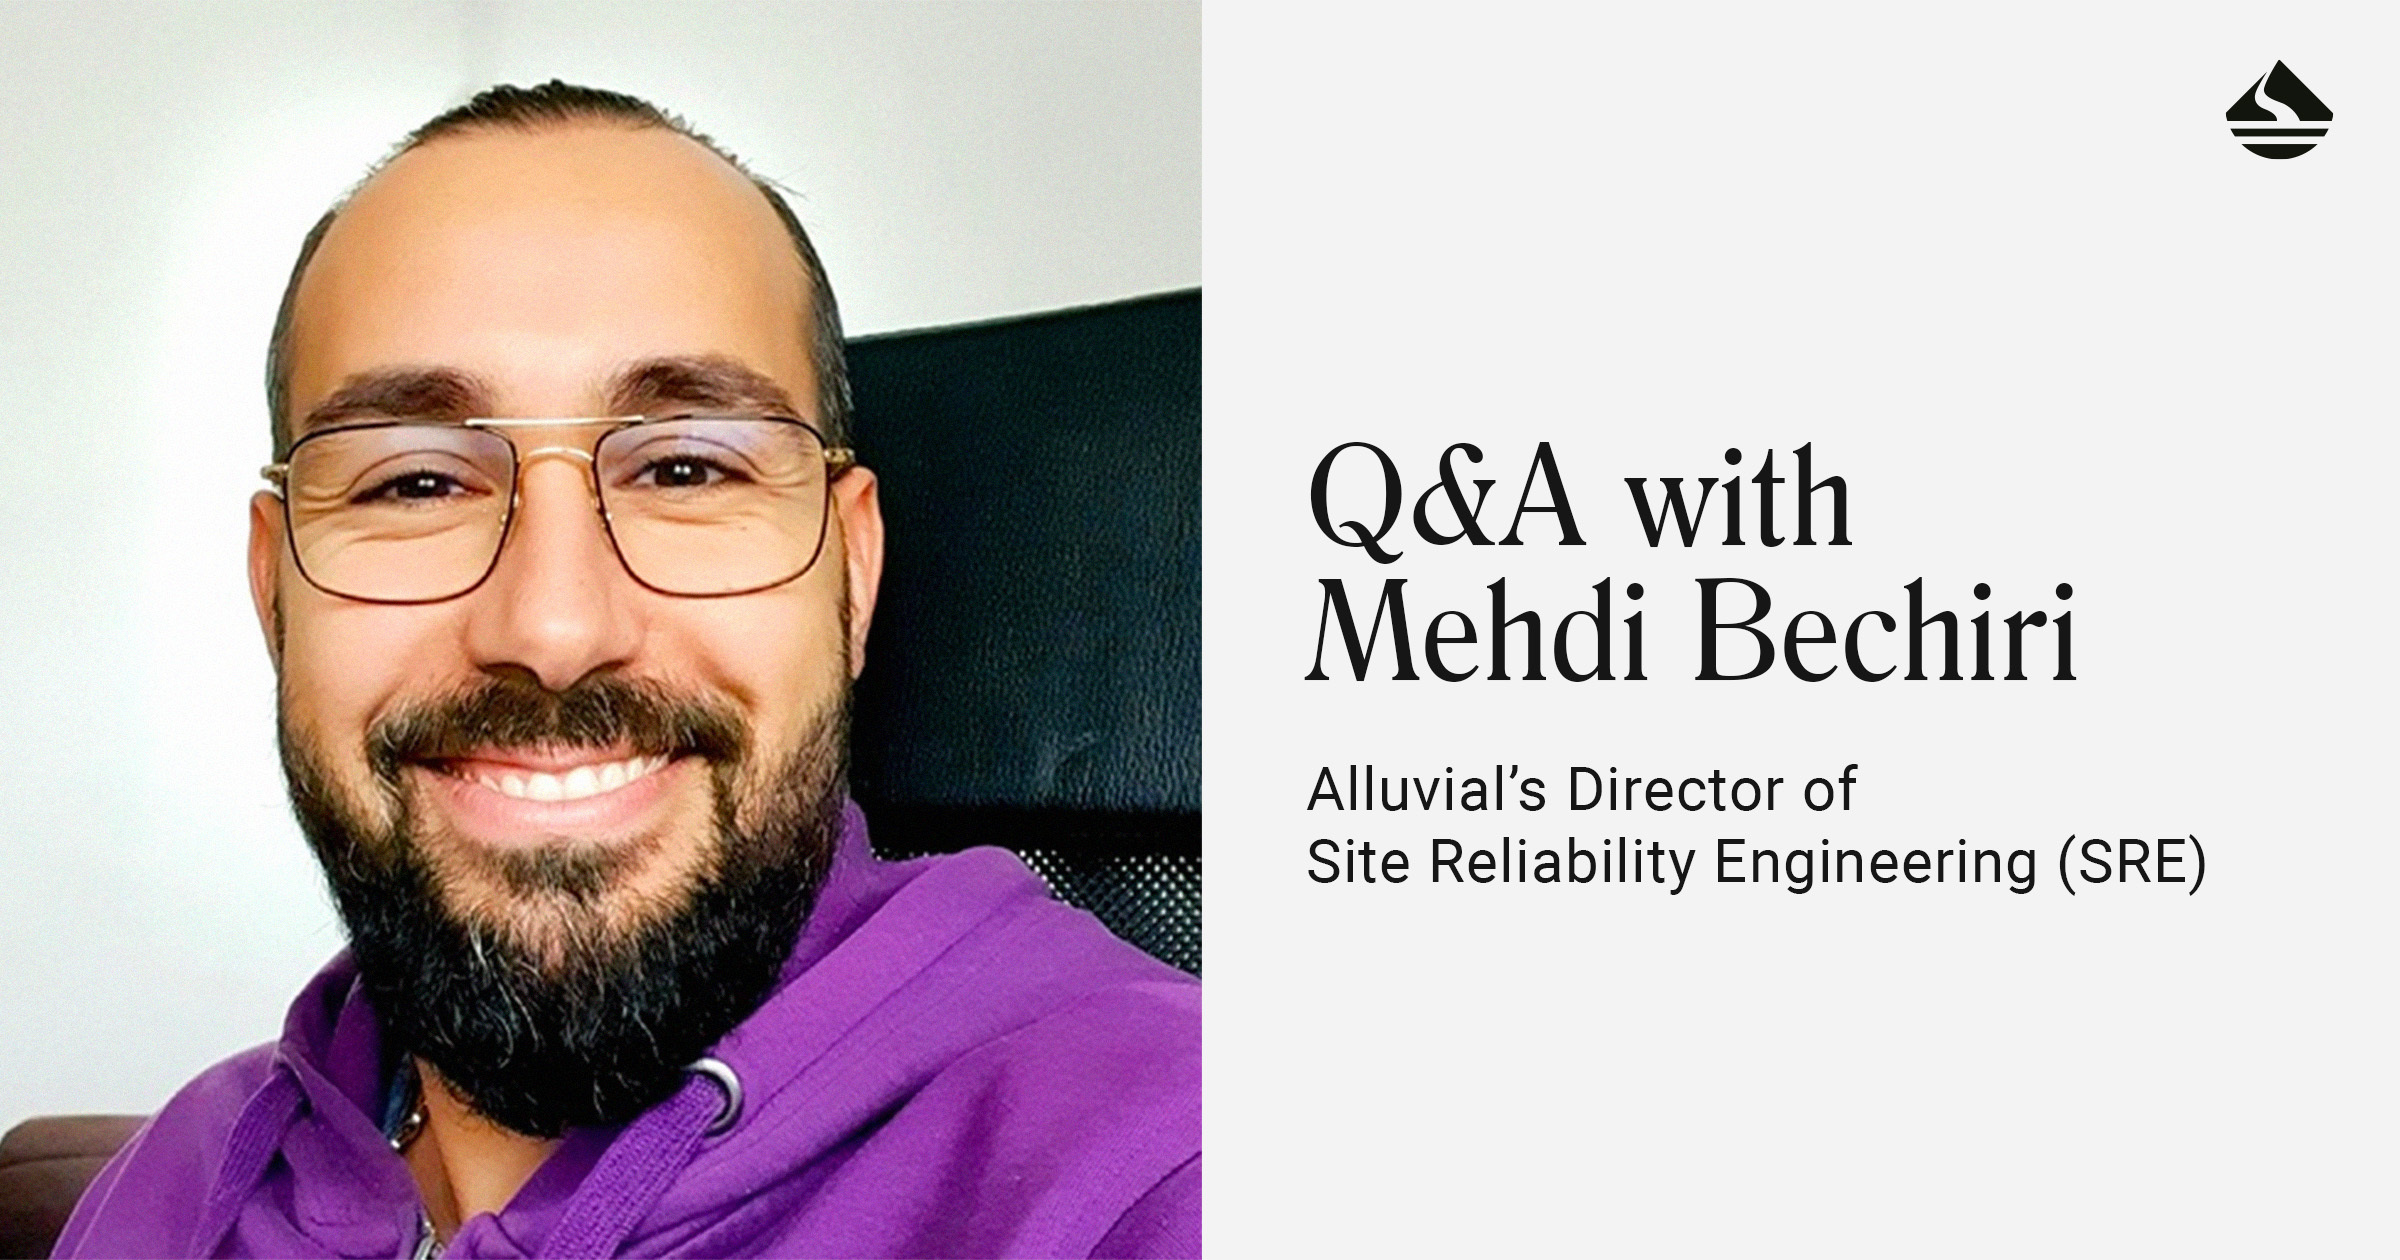 Q&A with Mehdi Bechiri, Alluvial